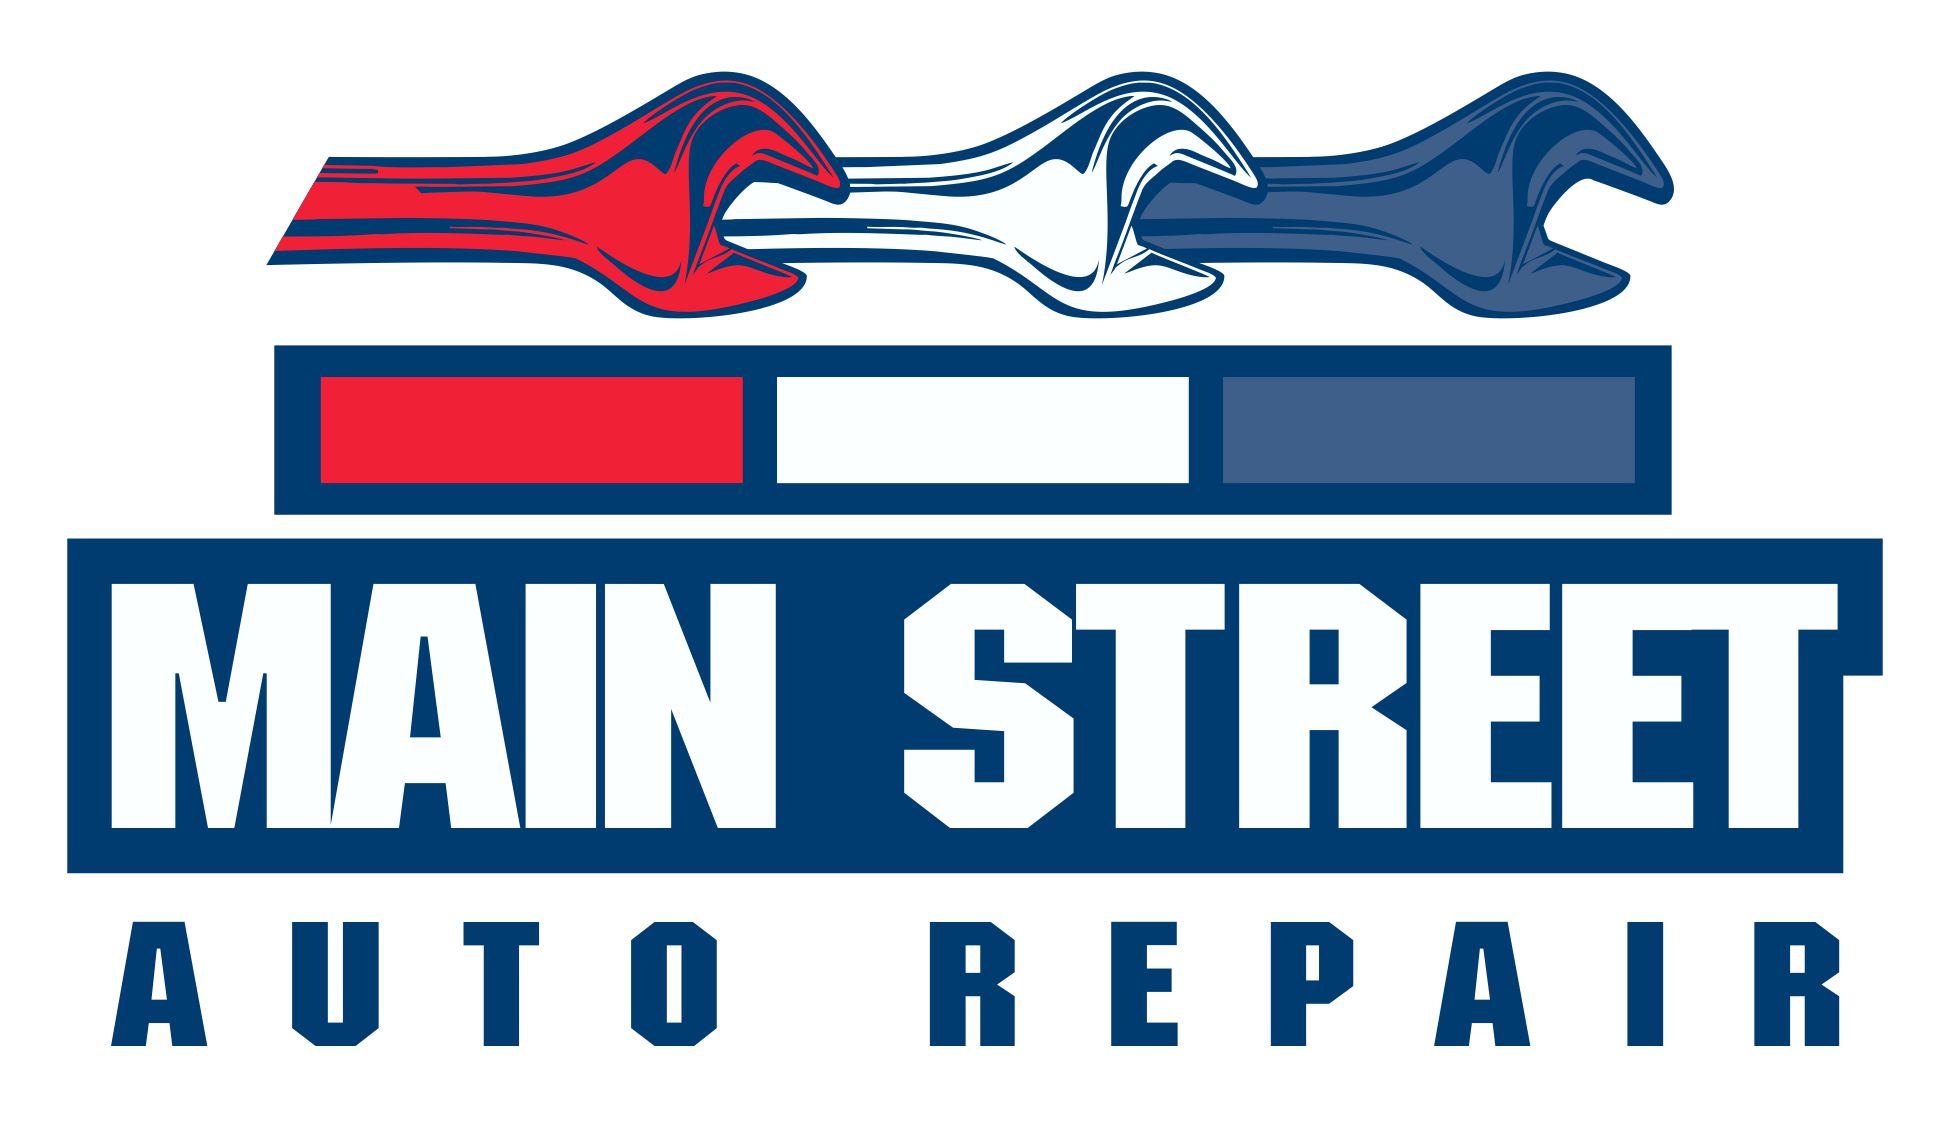 Main Street Auto Repair